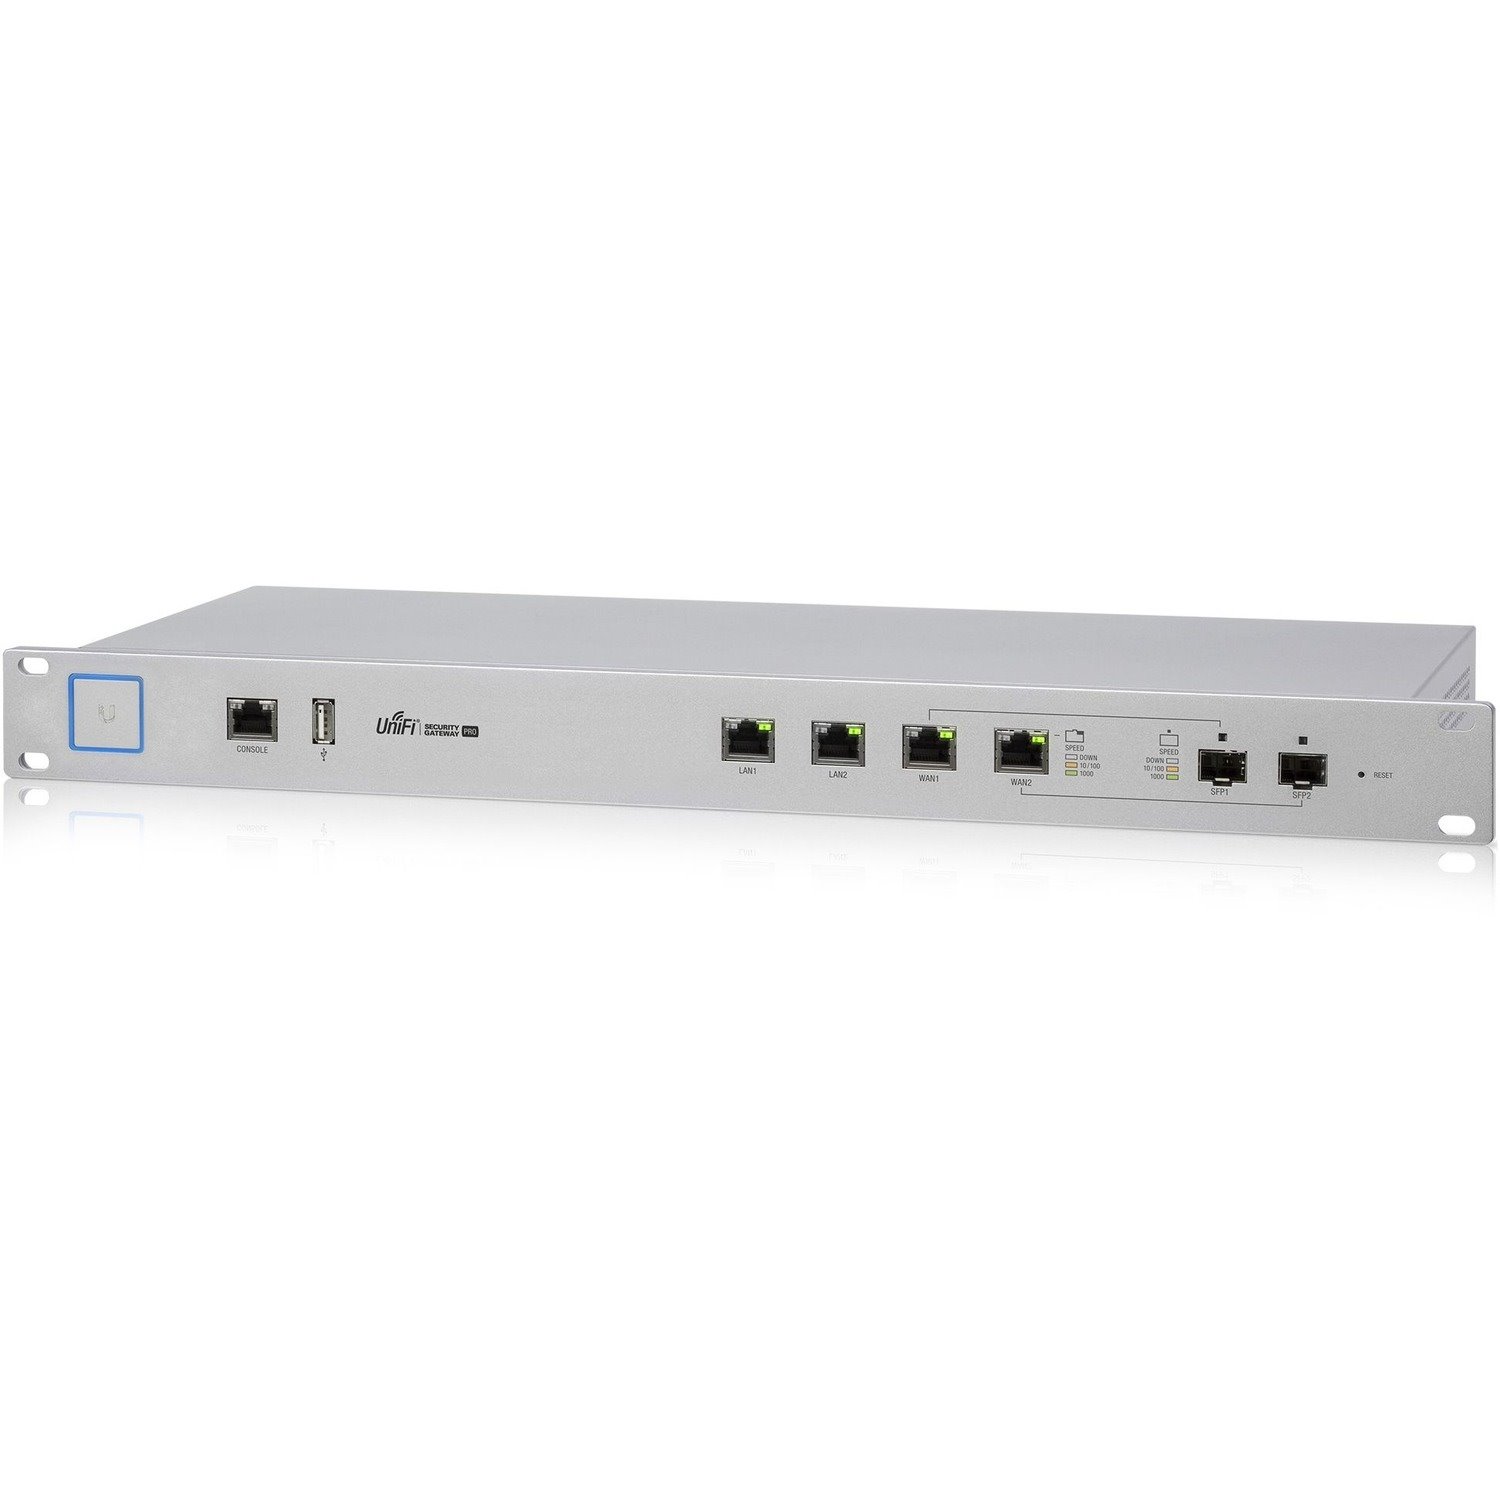 Ubiquiti Unifi USG-PRO-4 Router